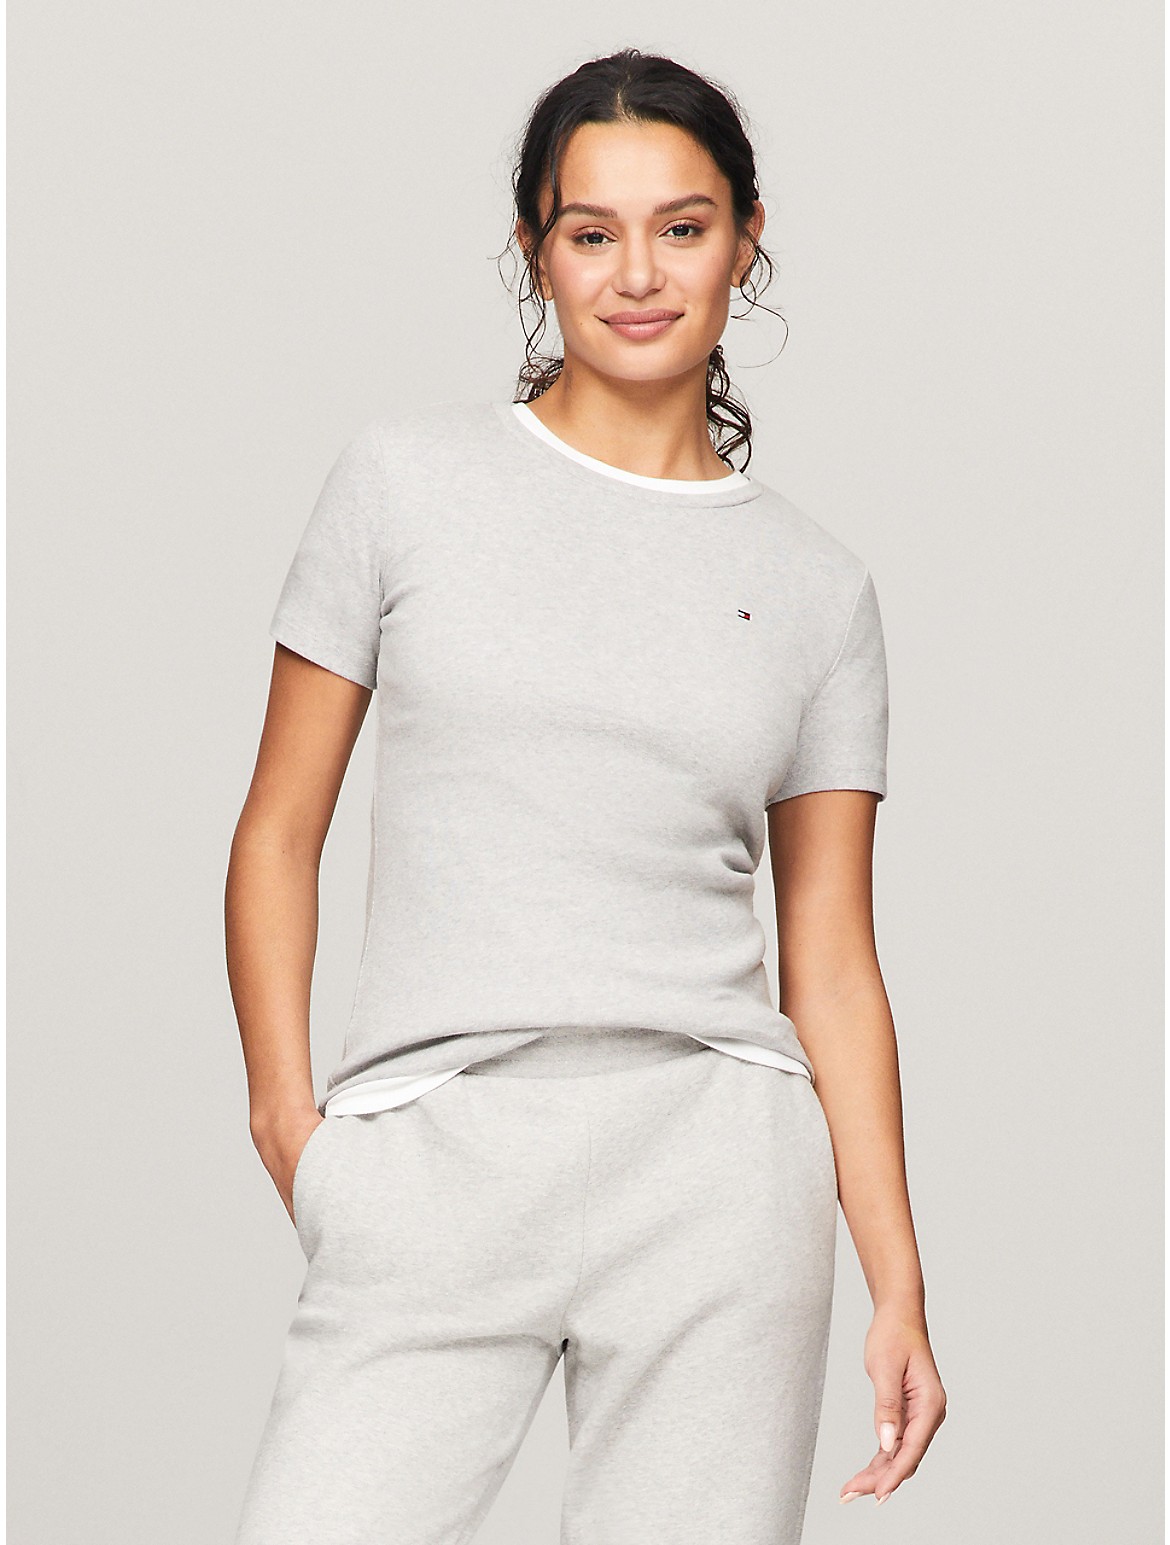 Tommy Hilfiger Women's Crewneck Favorite T-Shirt - Grey - S